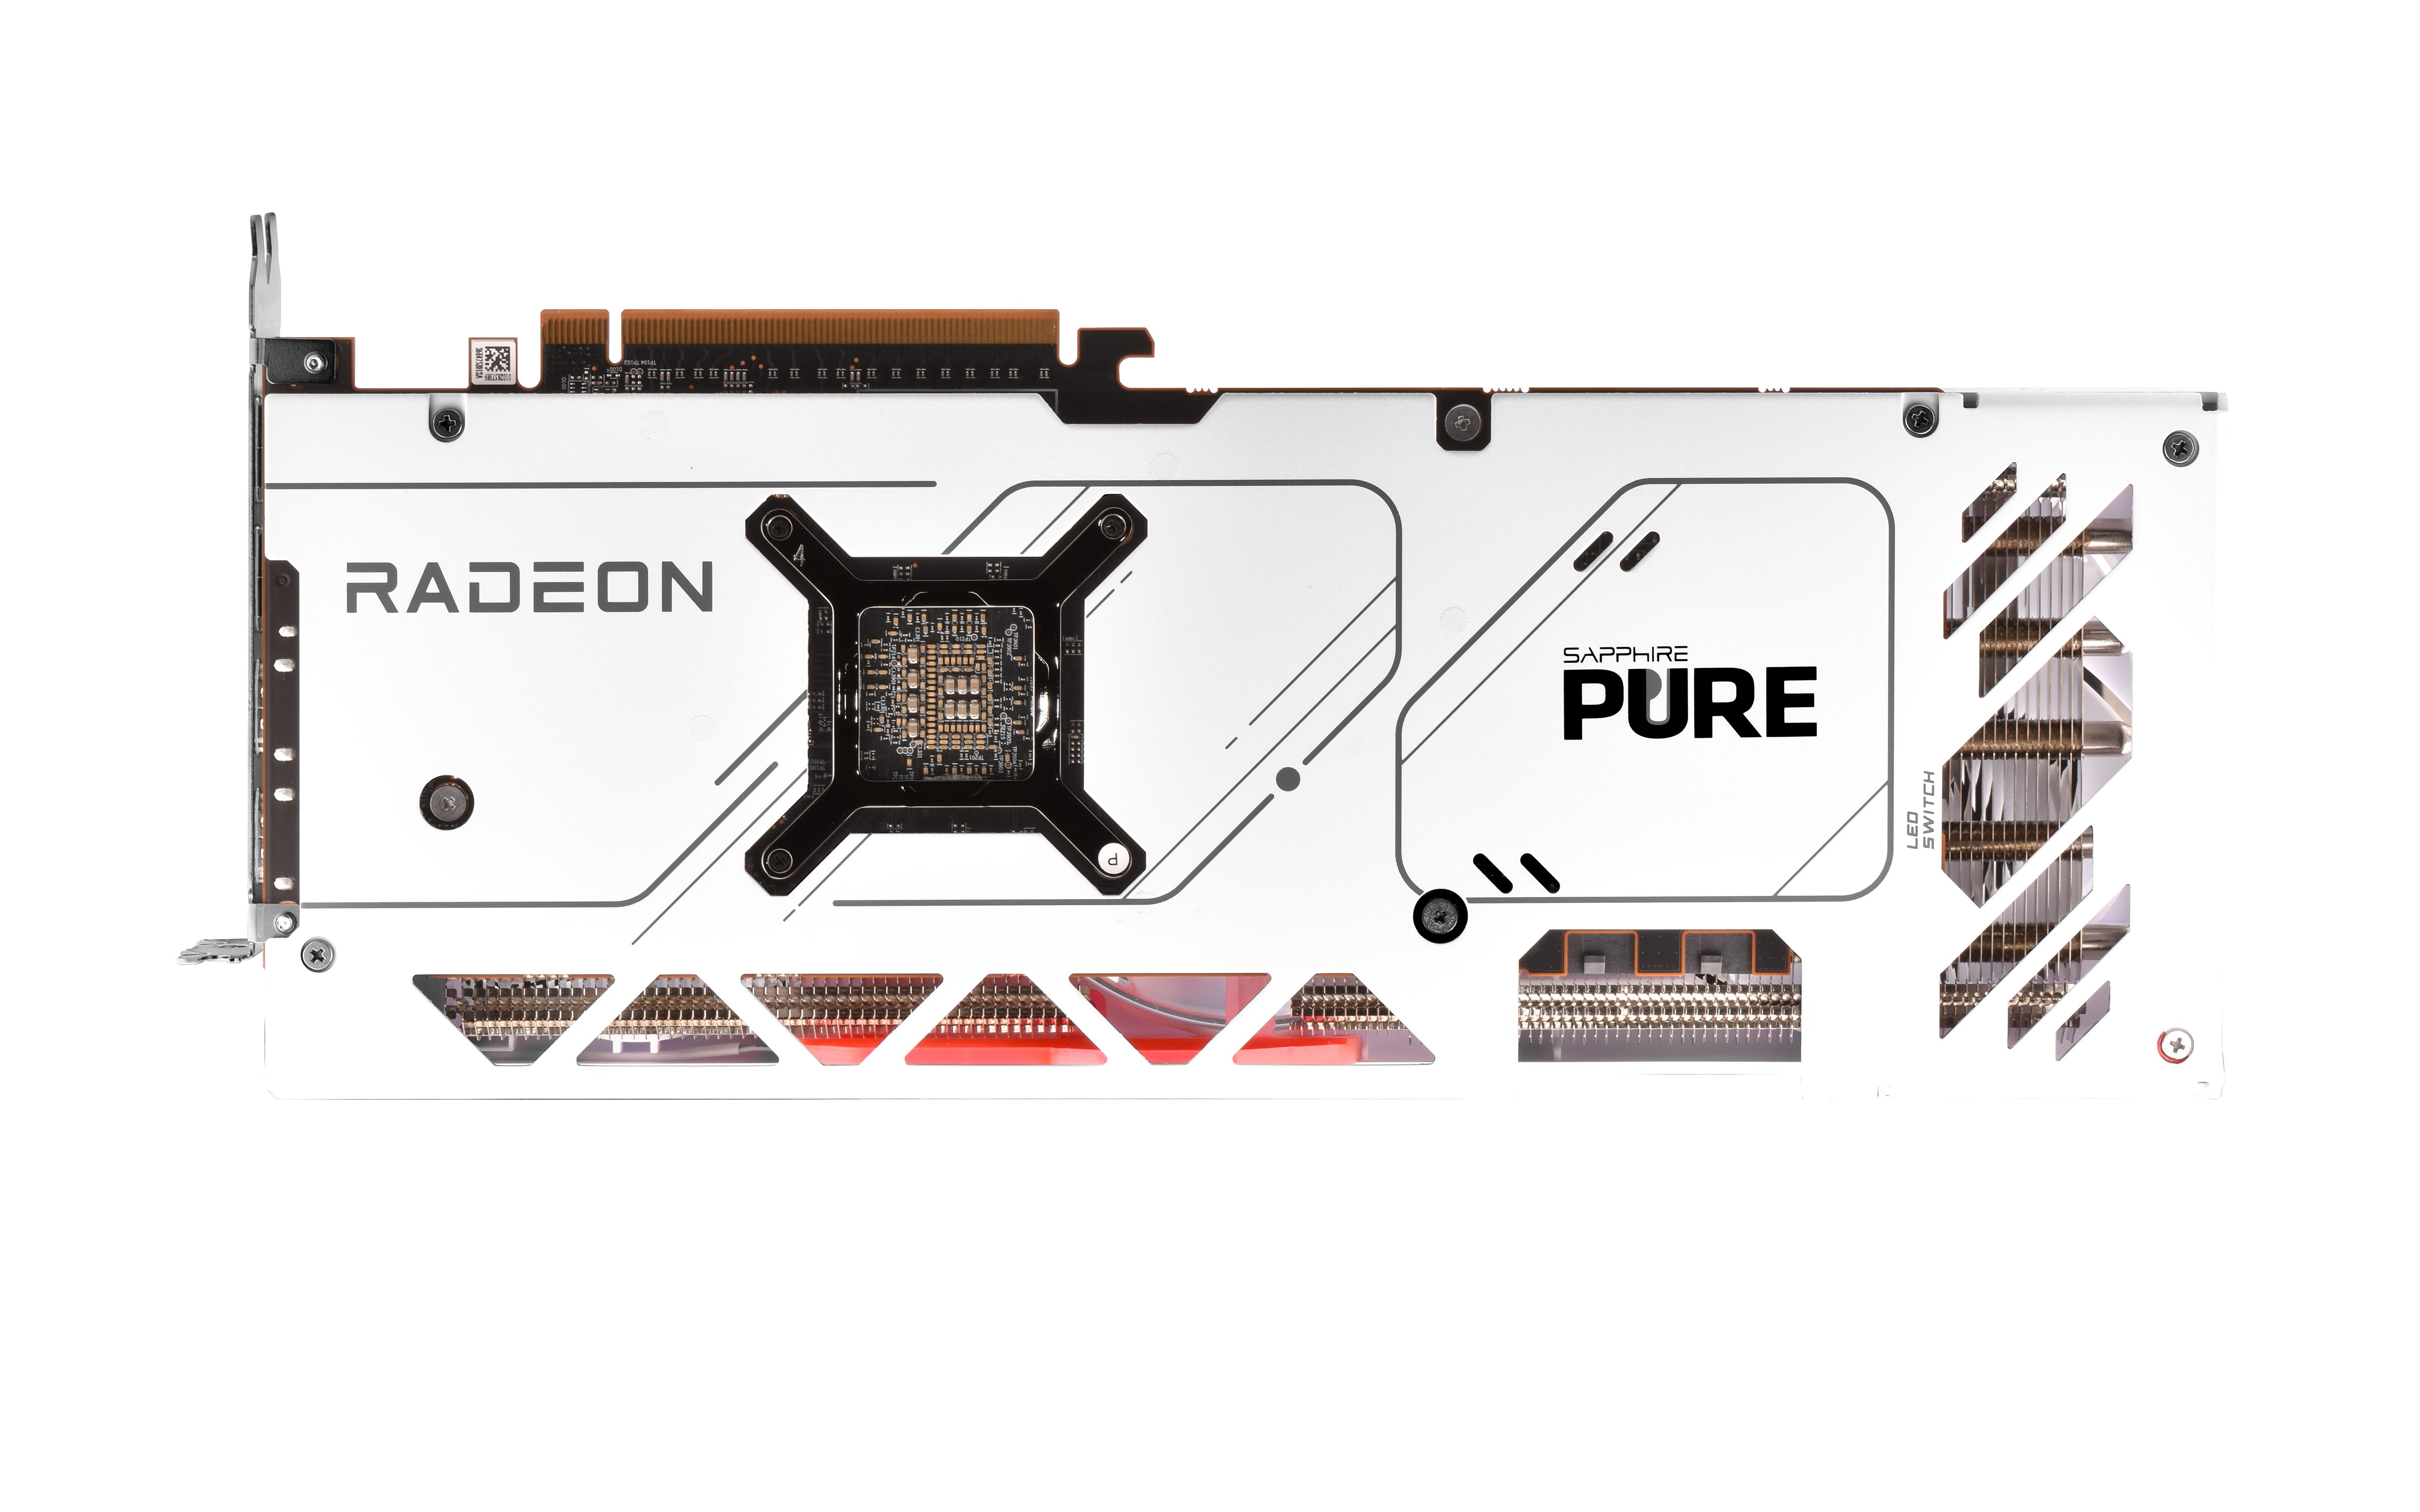 Sapphire Pure AMD Radeon RX 7900 GAMING 16GB GDDR6 OC 白色顯示卡